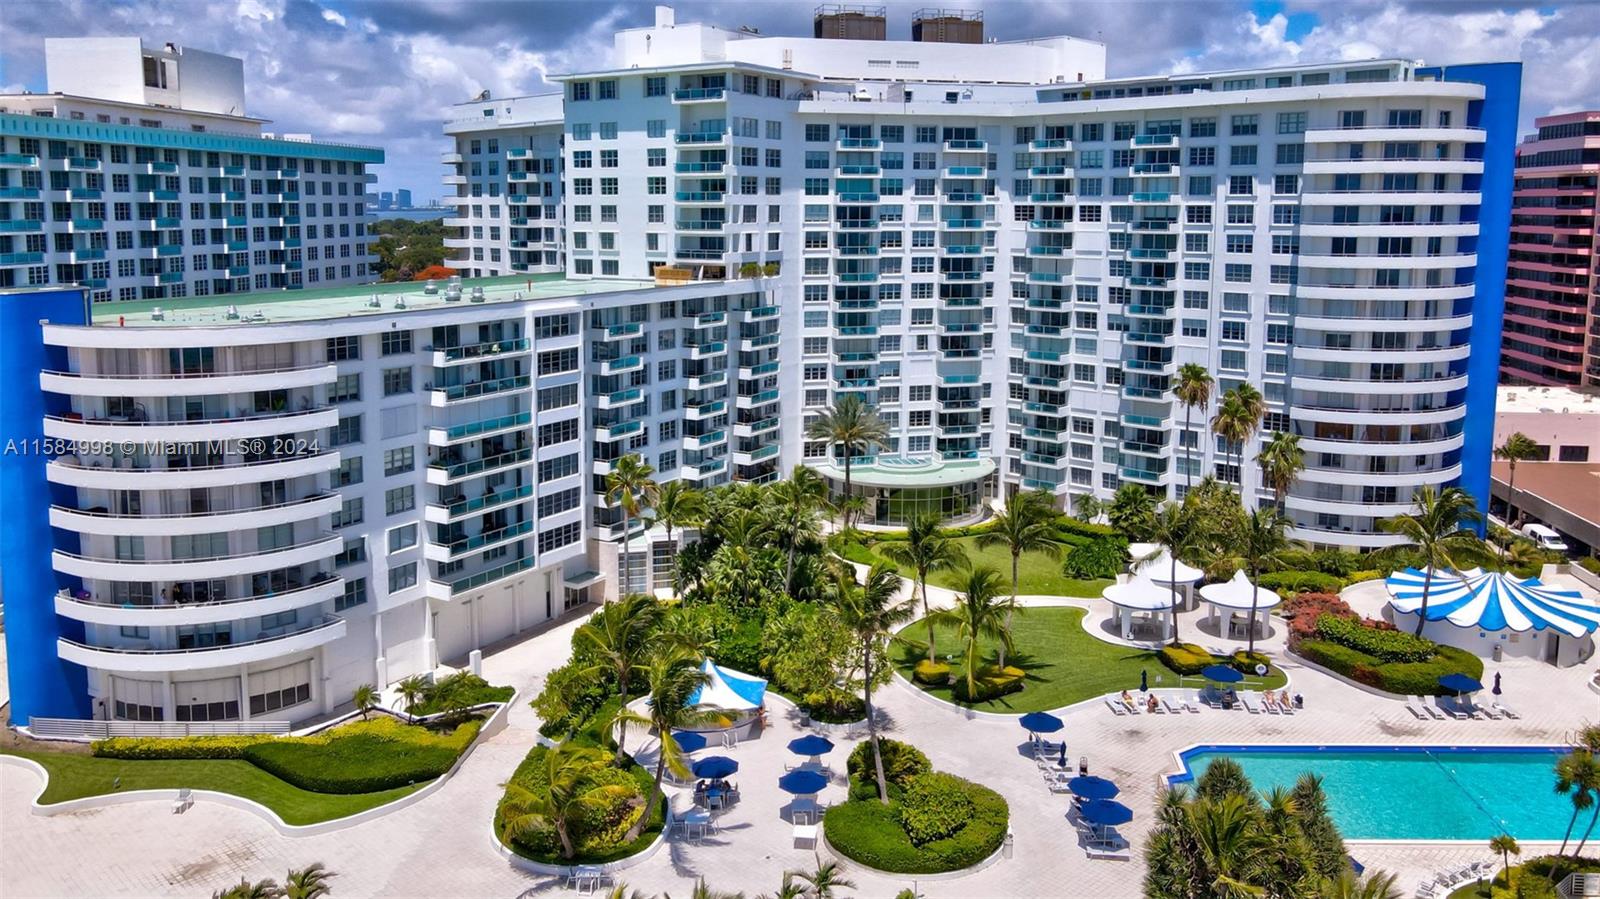 Rental Property at 5161 Collins Ave 314, Miami Beach, Miami-Dade County, Florida - Bedrooms: 2 
Bathrooms: 2  - $4,700 MO.